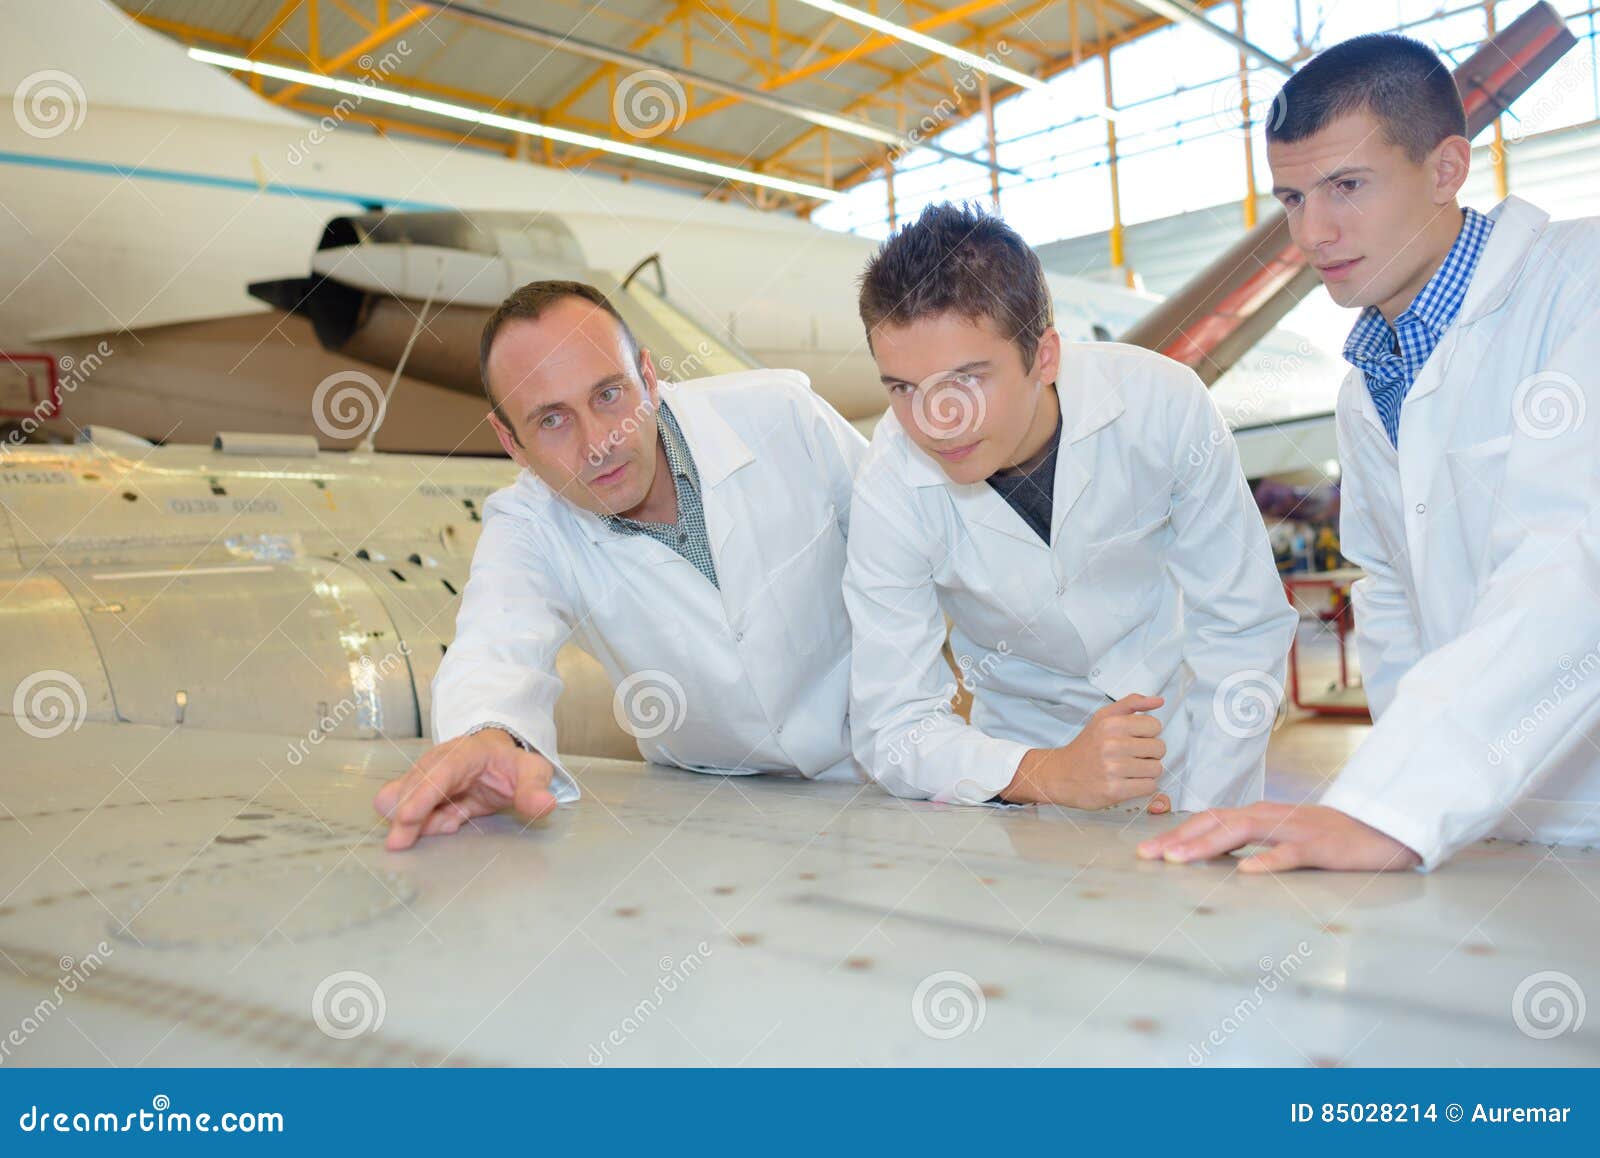 aerospace engineers studying blueprint